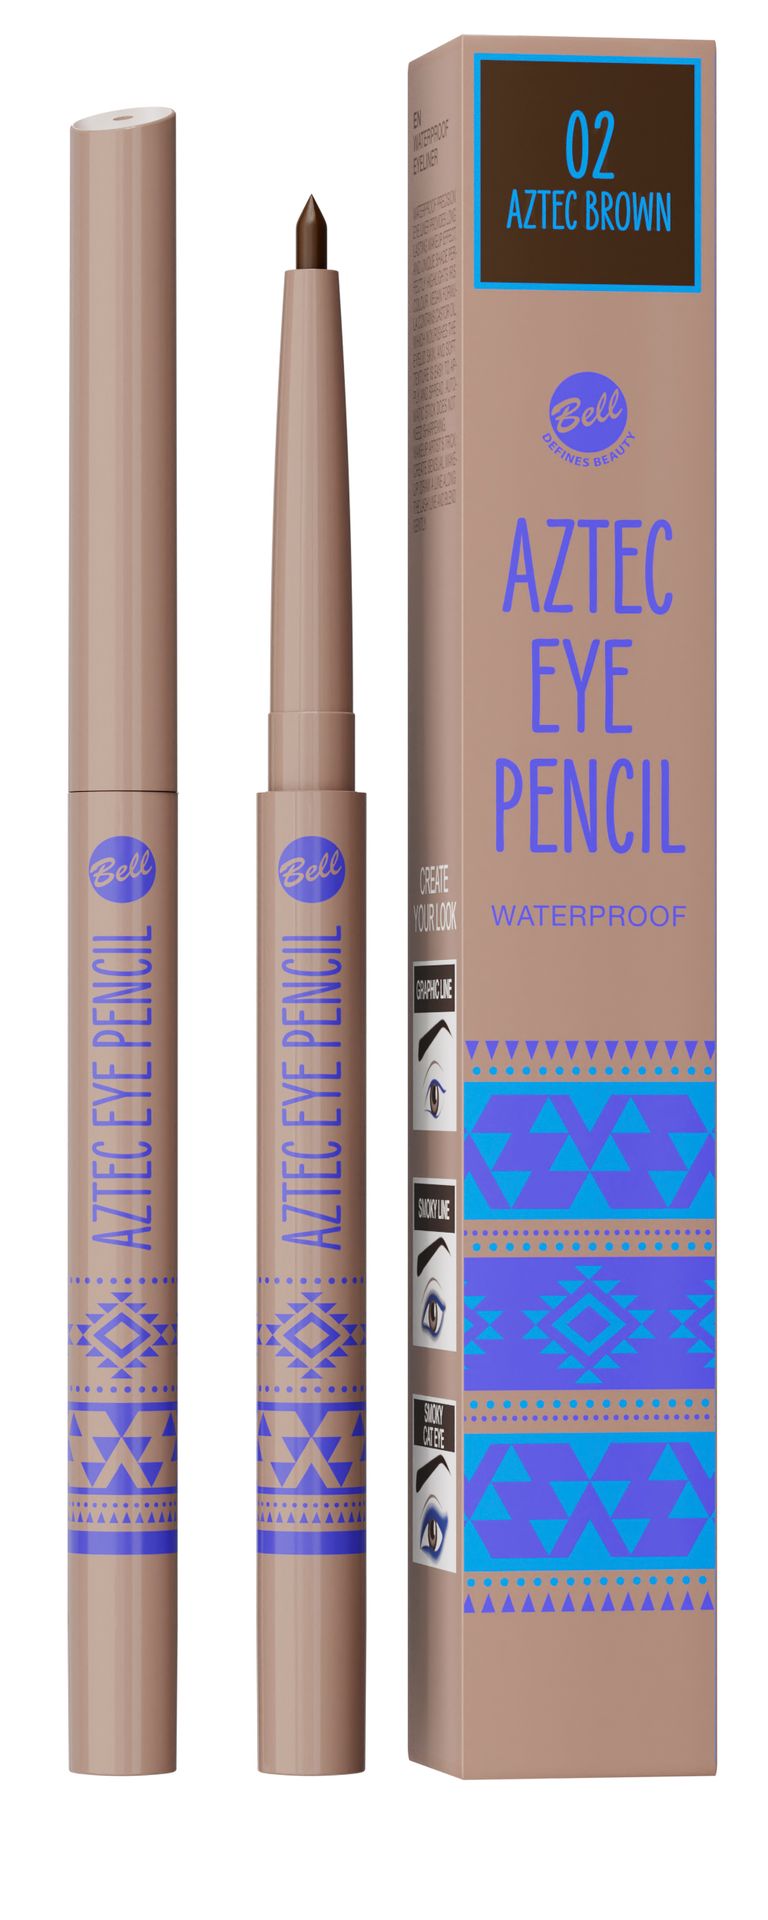 Bell konturówka do oczu Aztec Eye Pencil 002, 0,22g